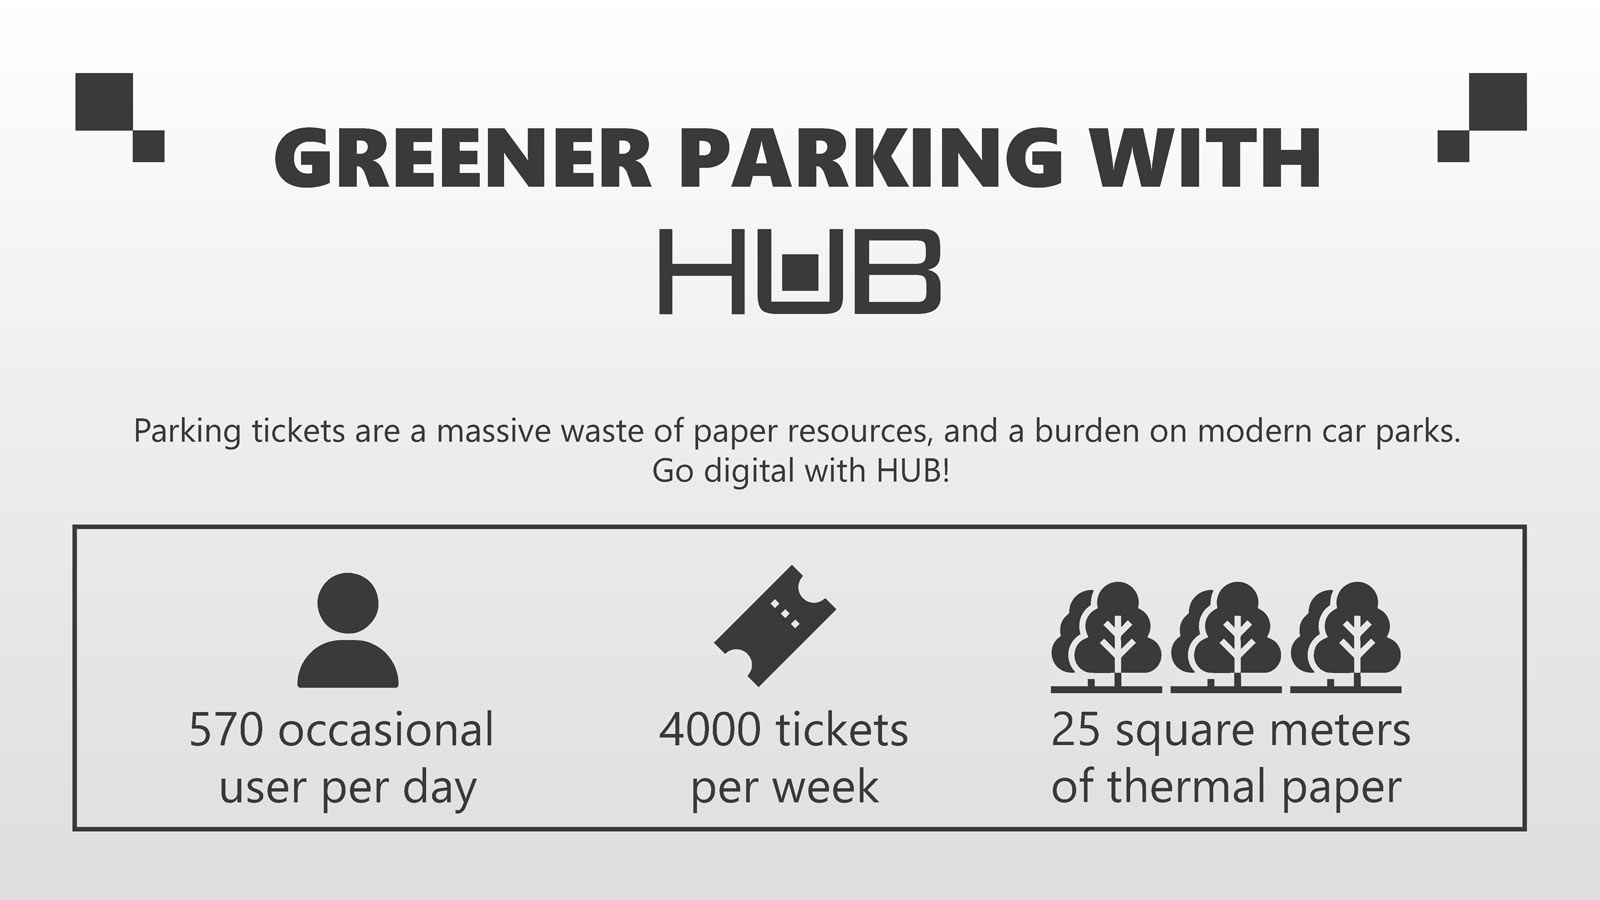 Greener parking with HUB